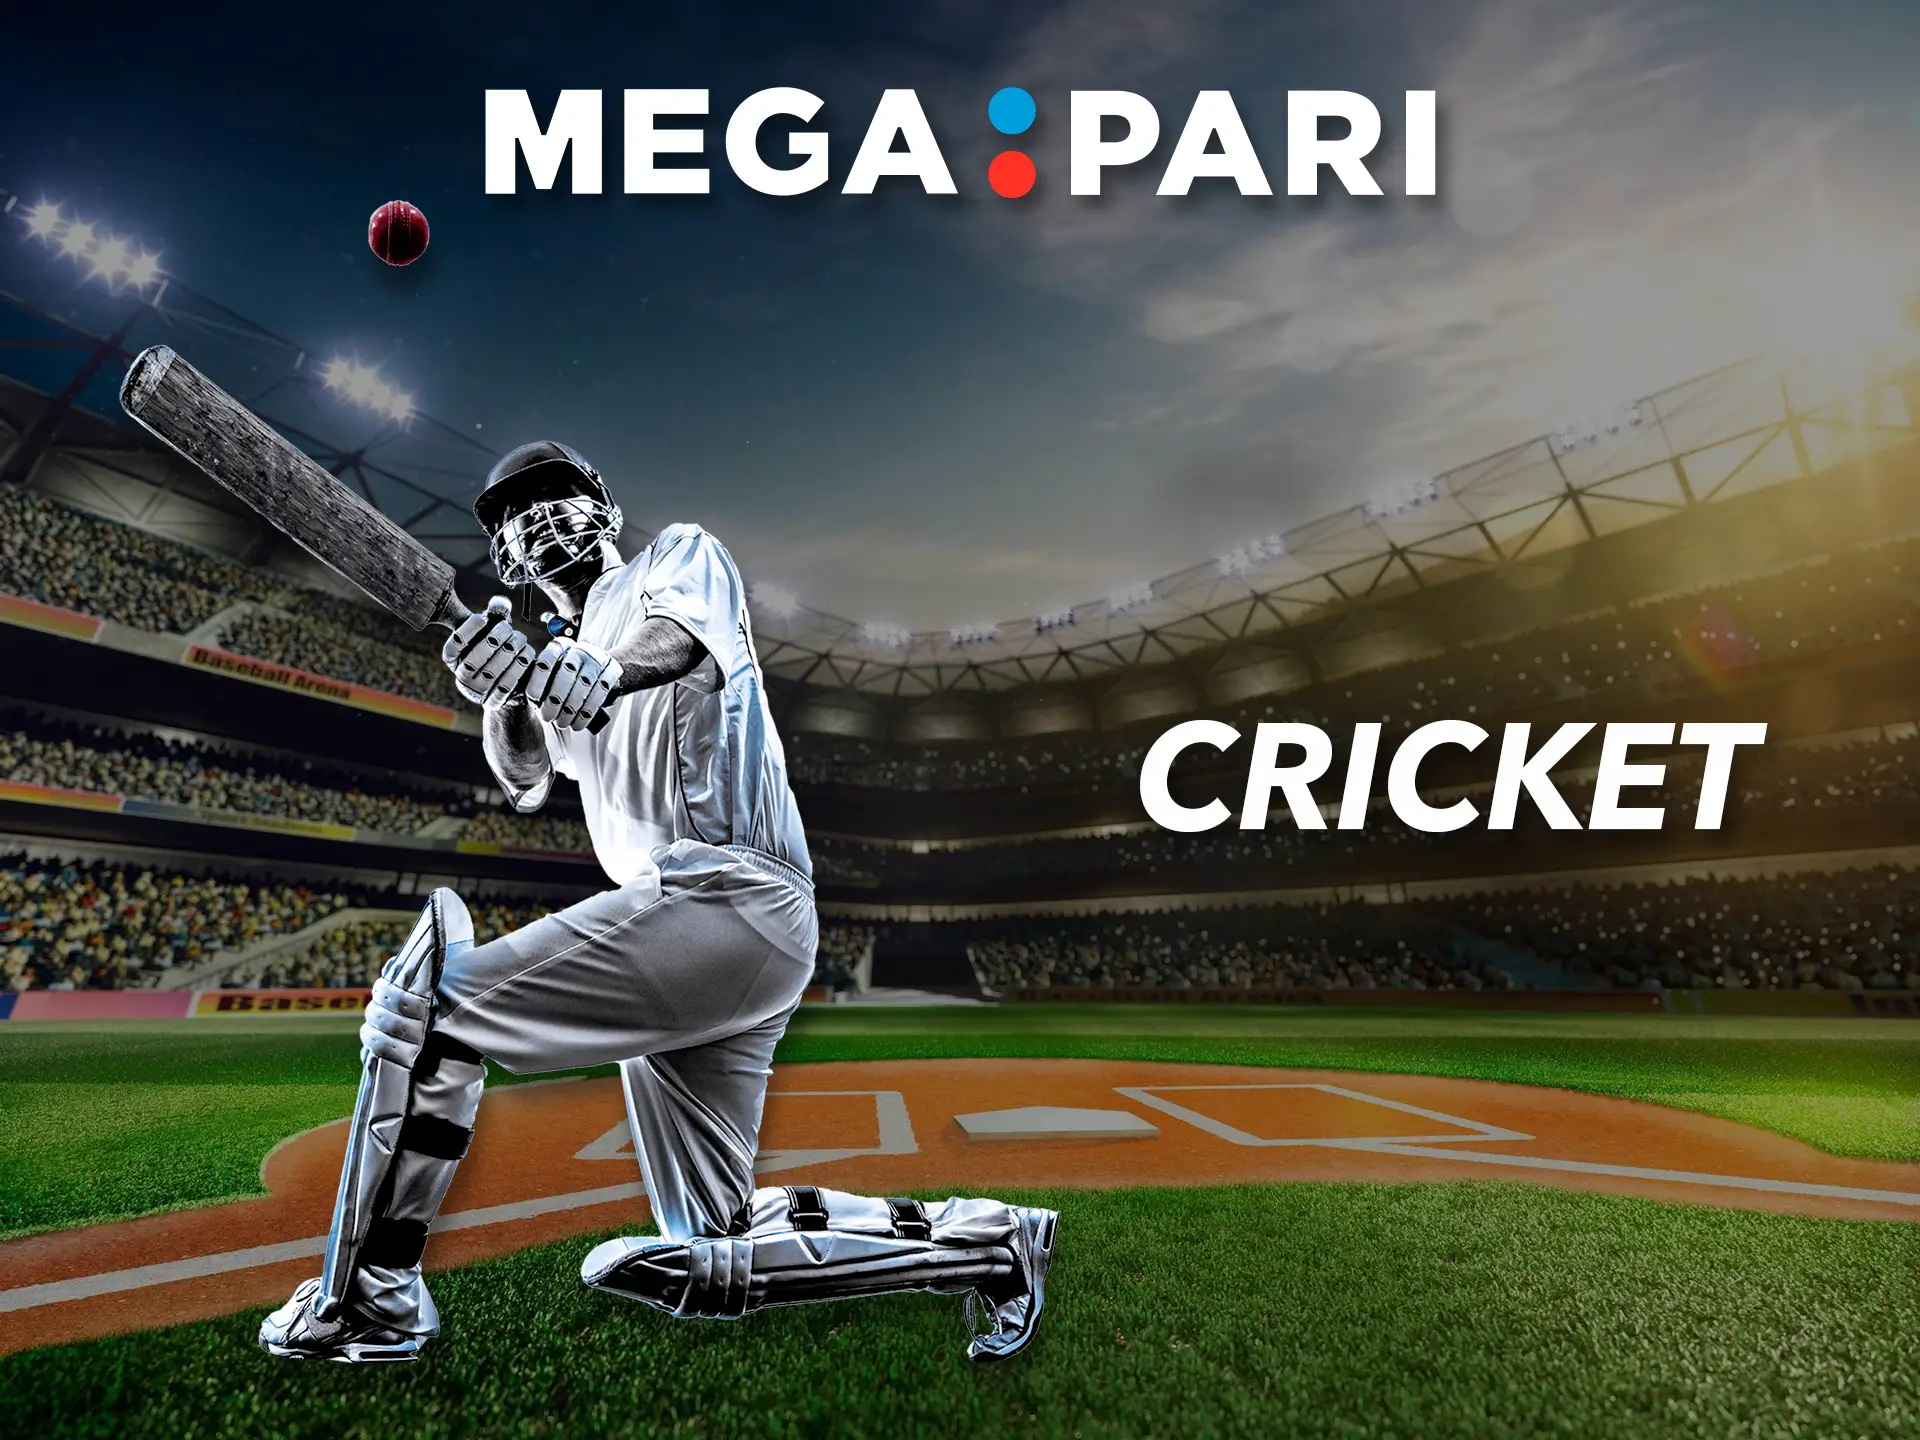 Cricket ranks high in Megapari's ranking of sports disciplines.